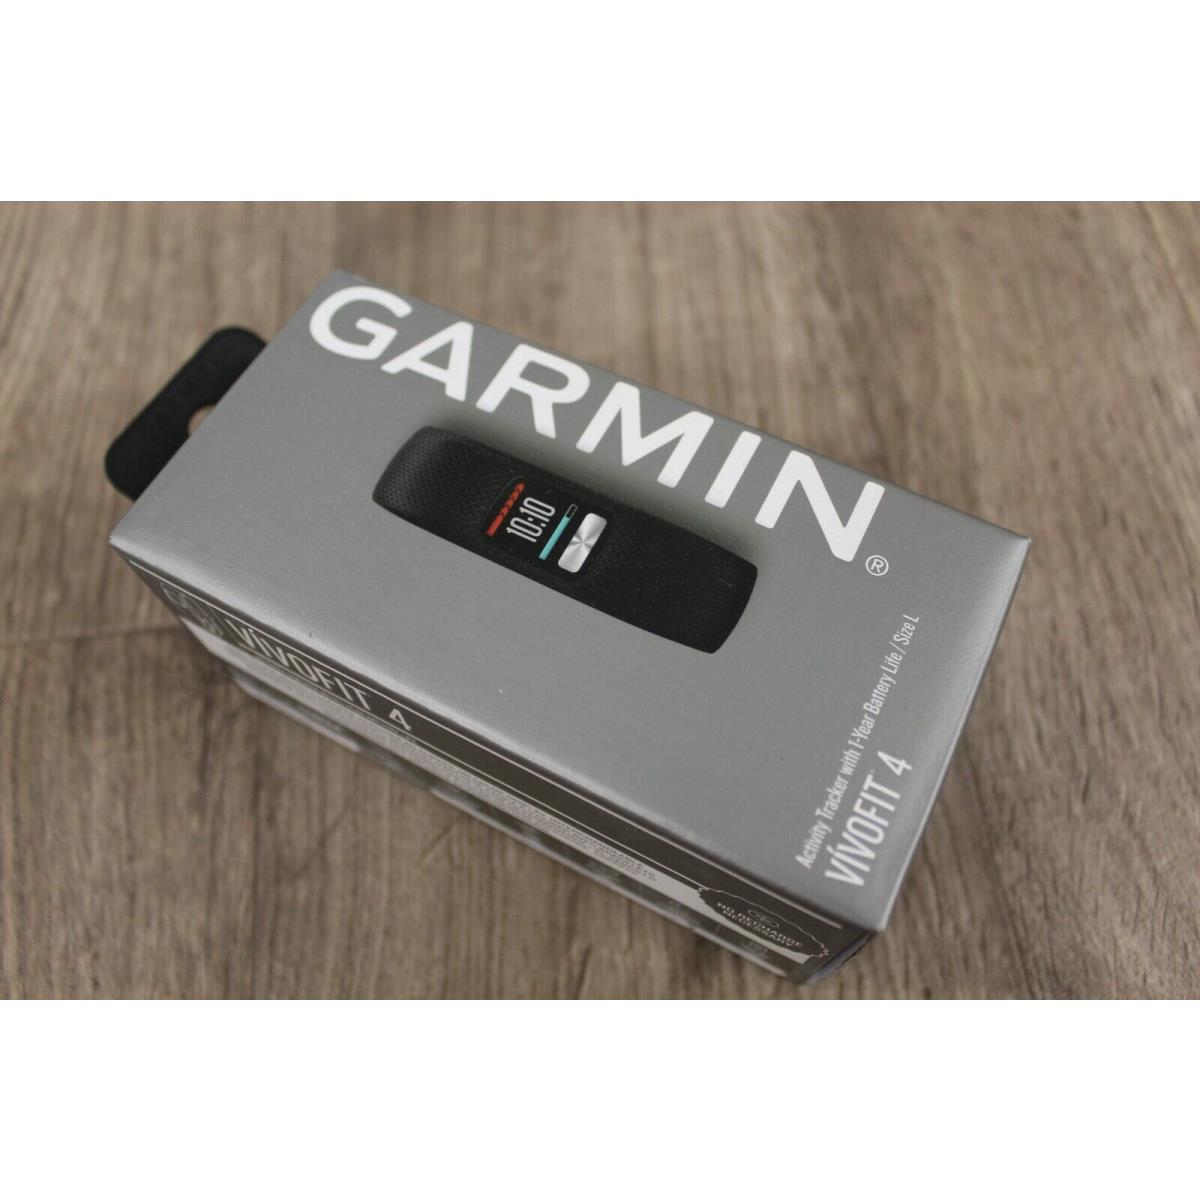 Garmin Vivofit Smart Gps Activity Tracker Watch Size L 010-01847-03